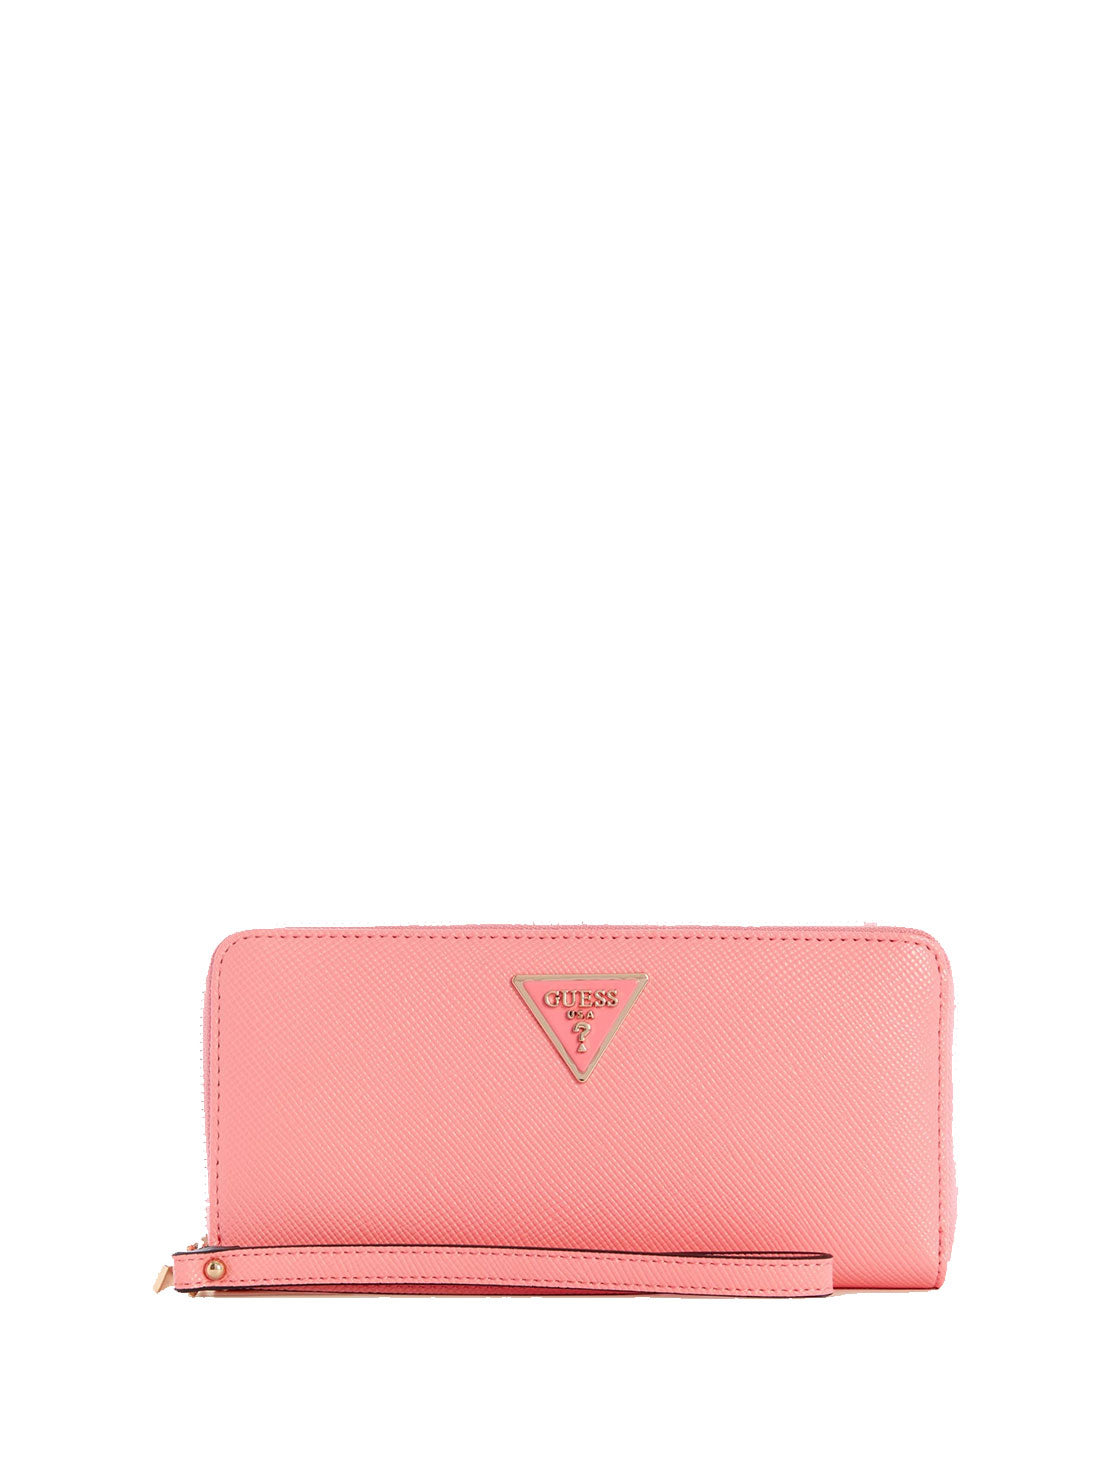 GUESS Women's Pink Laurel Large Wallet ZG850046 Front View